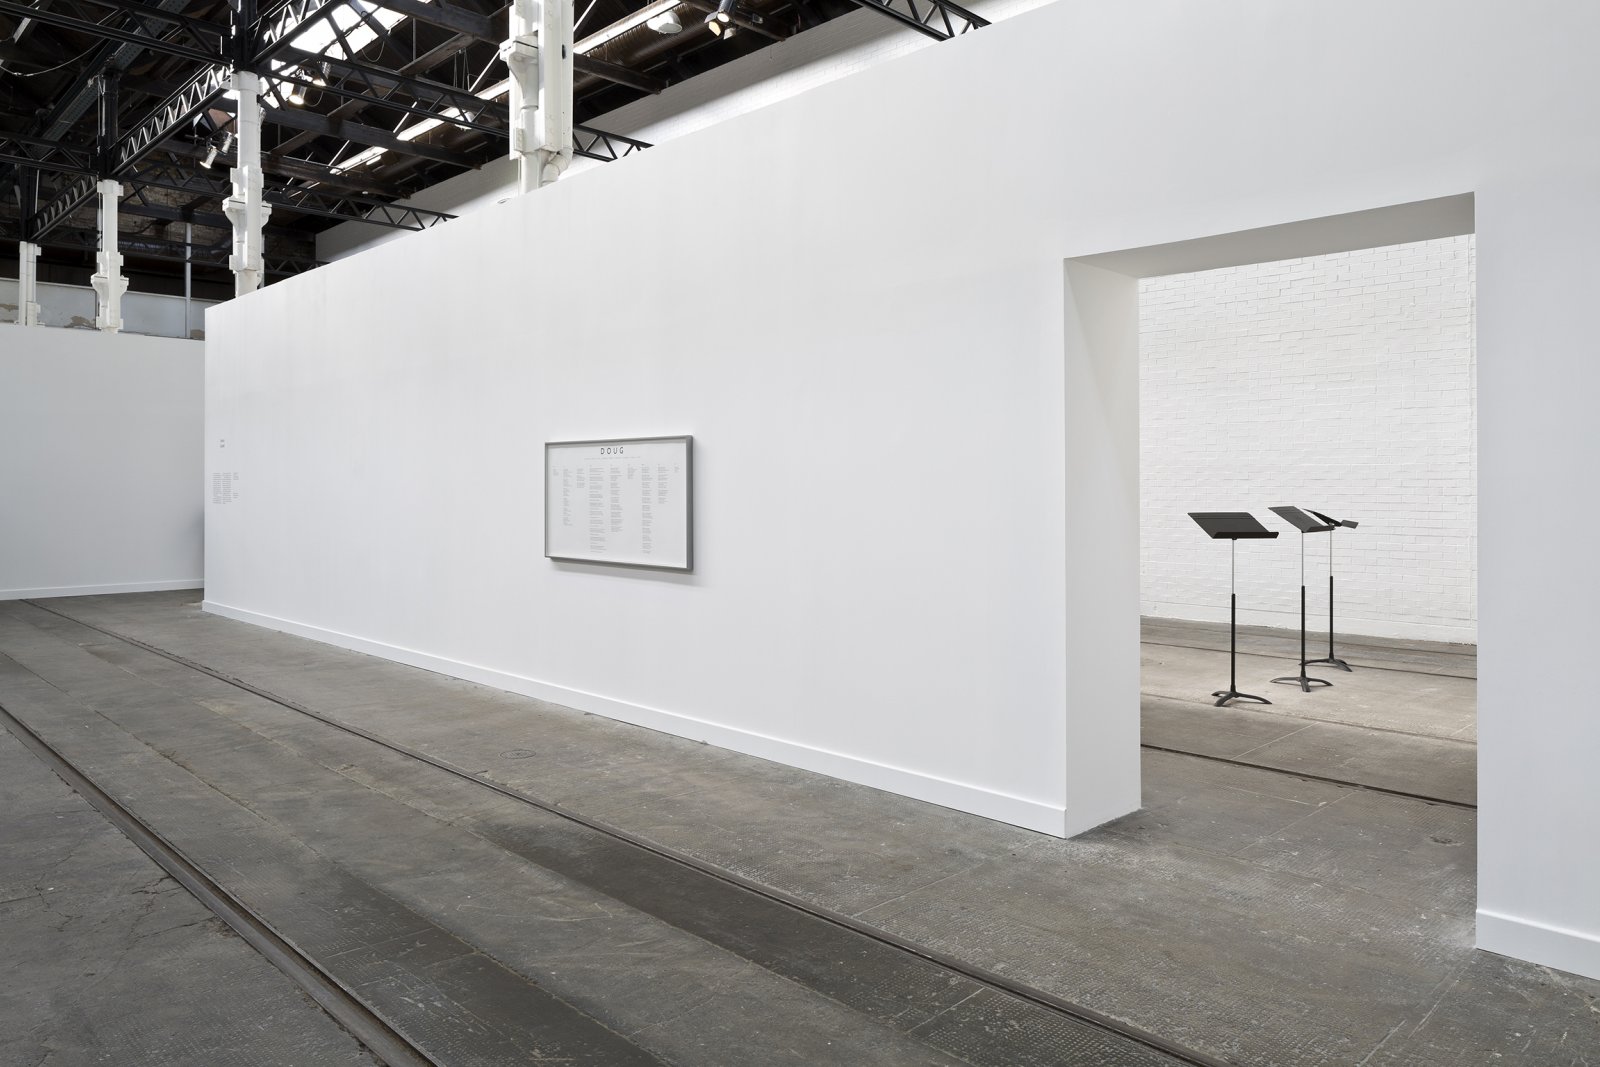 Janice Kerbel, DOUG, 2014, live performance. Installation view, Turner Prize 2015, Tramway, Glasgow, UK, 2015